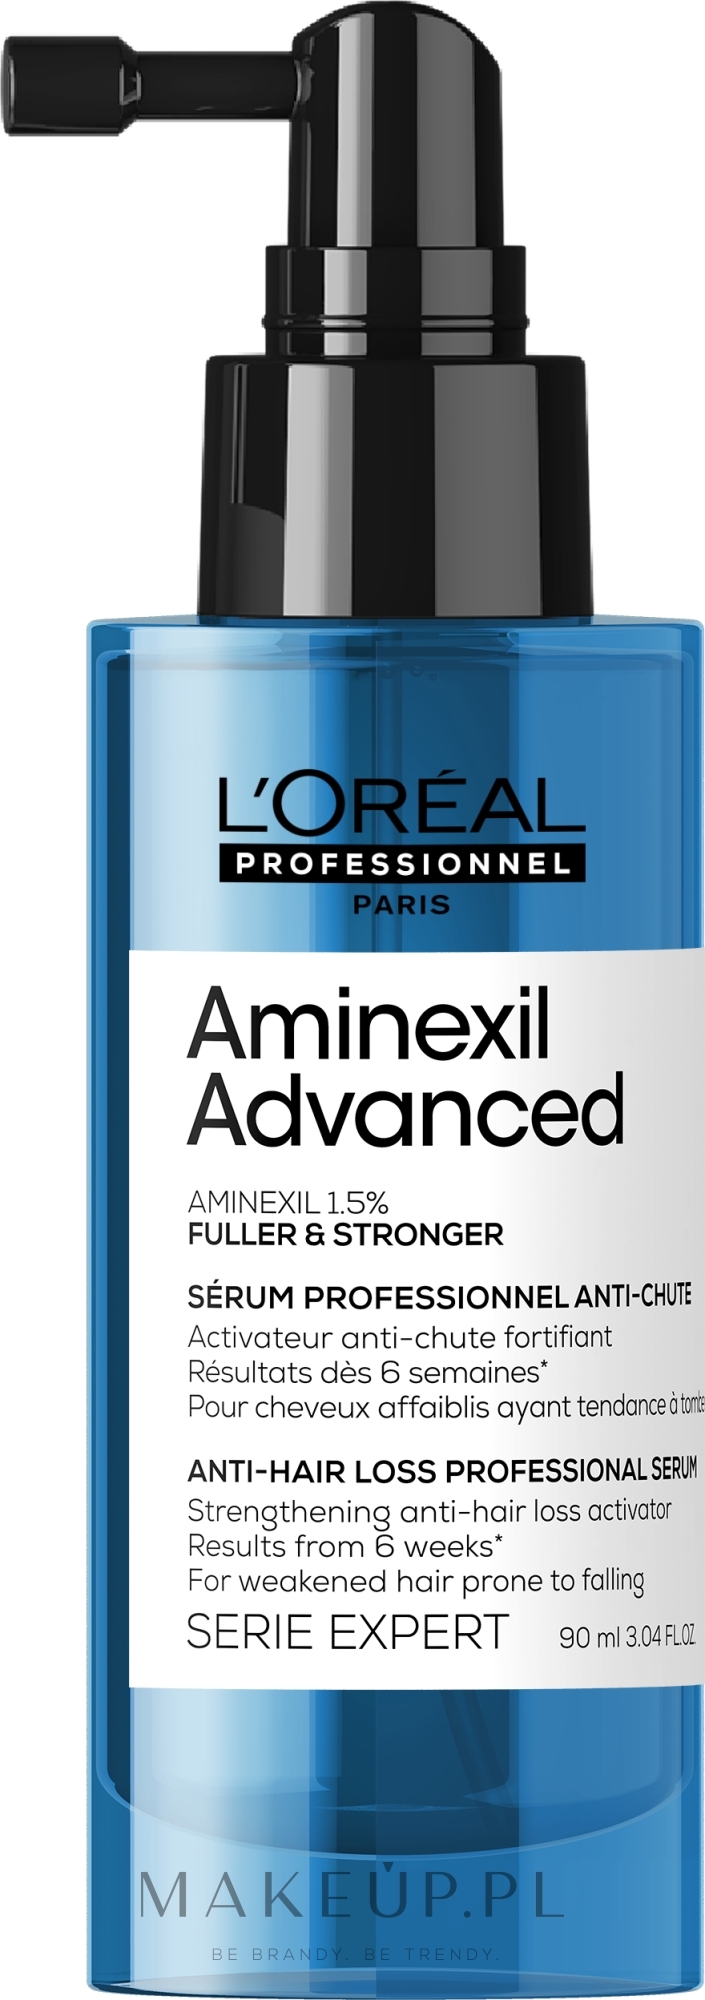 Serum do skóry głowy - L'Oreal Professionnel Aminexil Advanced Fuller & Stronger Anti-Hair Loss Serum — Zdjęcie 90 ml